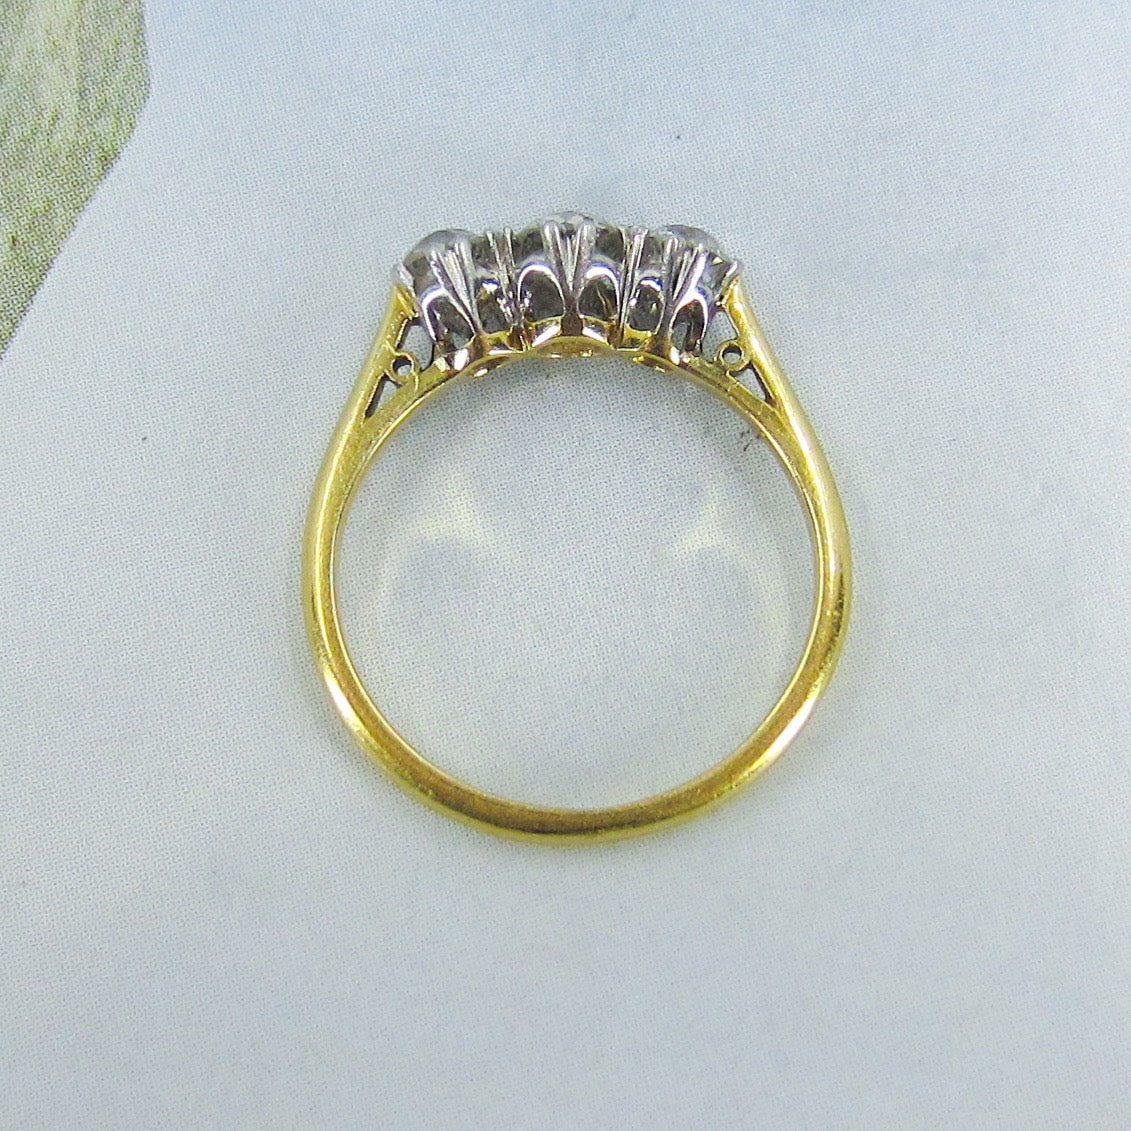 SOLD-Edwardian Three Old Mine Diamond Ring Platinum/18k c. 1910